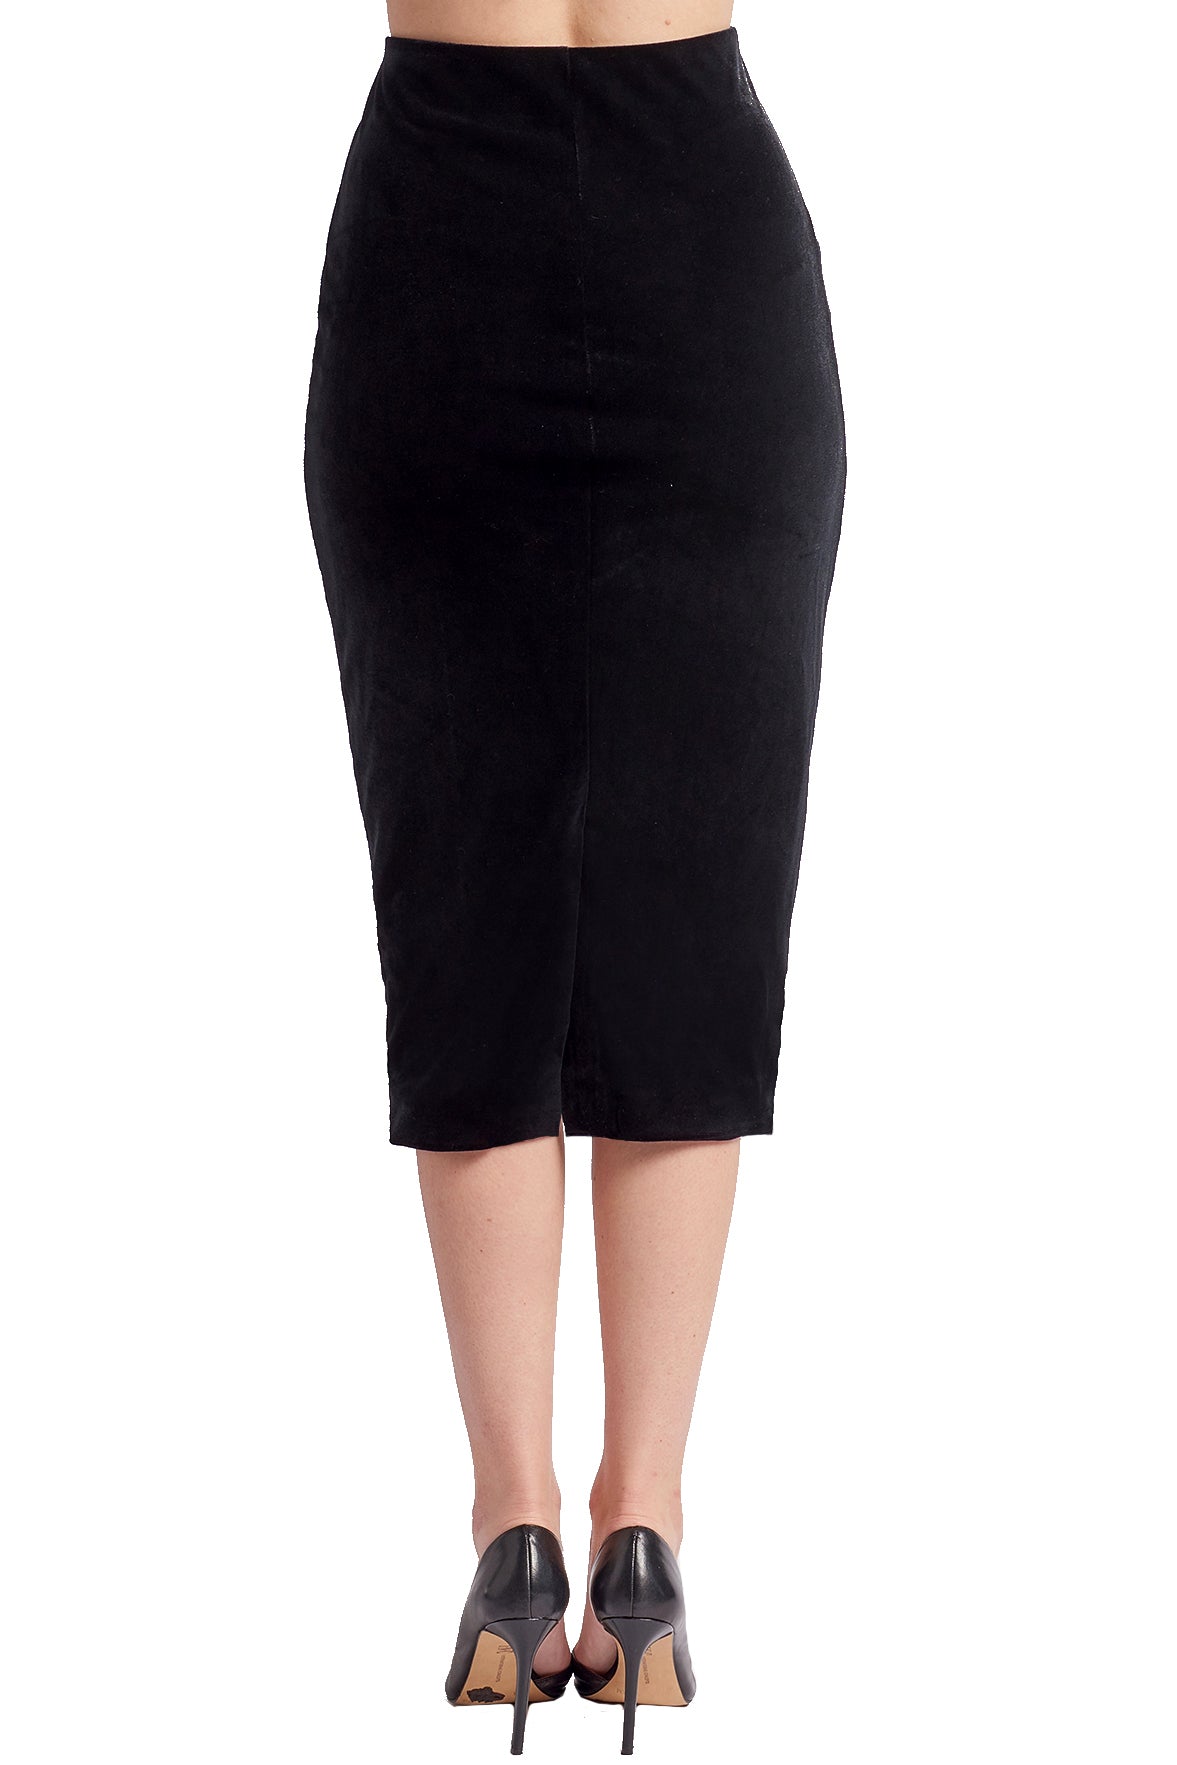 Back view of model wearing black knit stretch velvet body-con midi pencil skirt with back bottom slit.